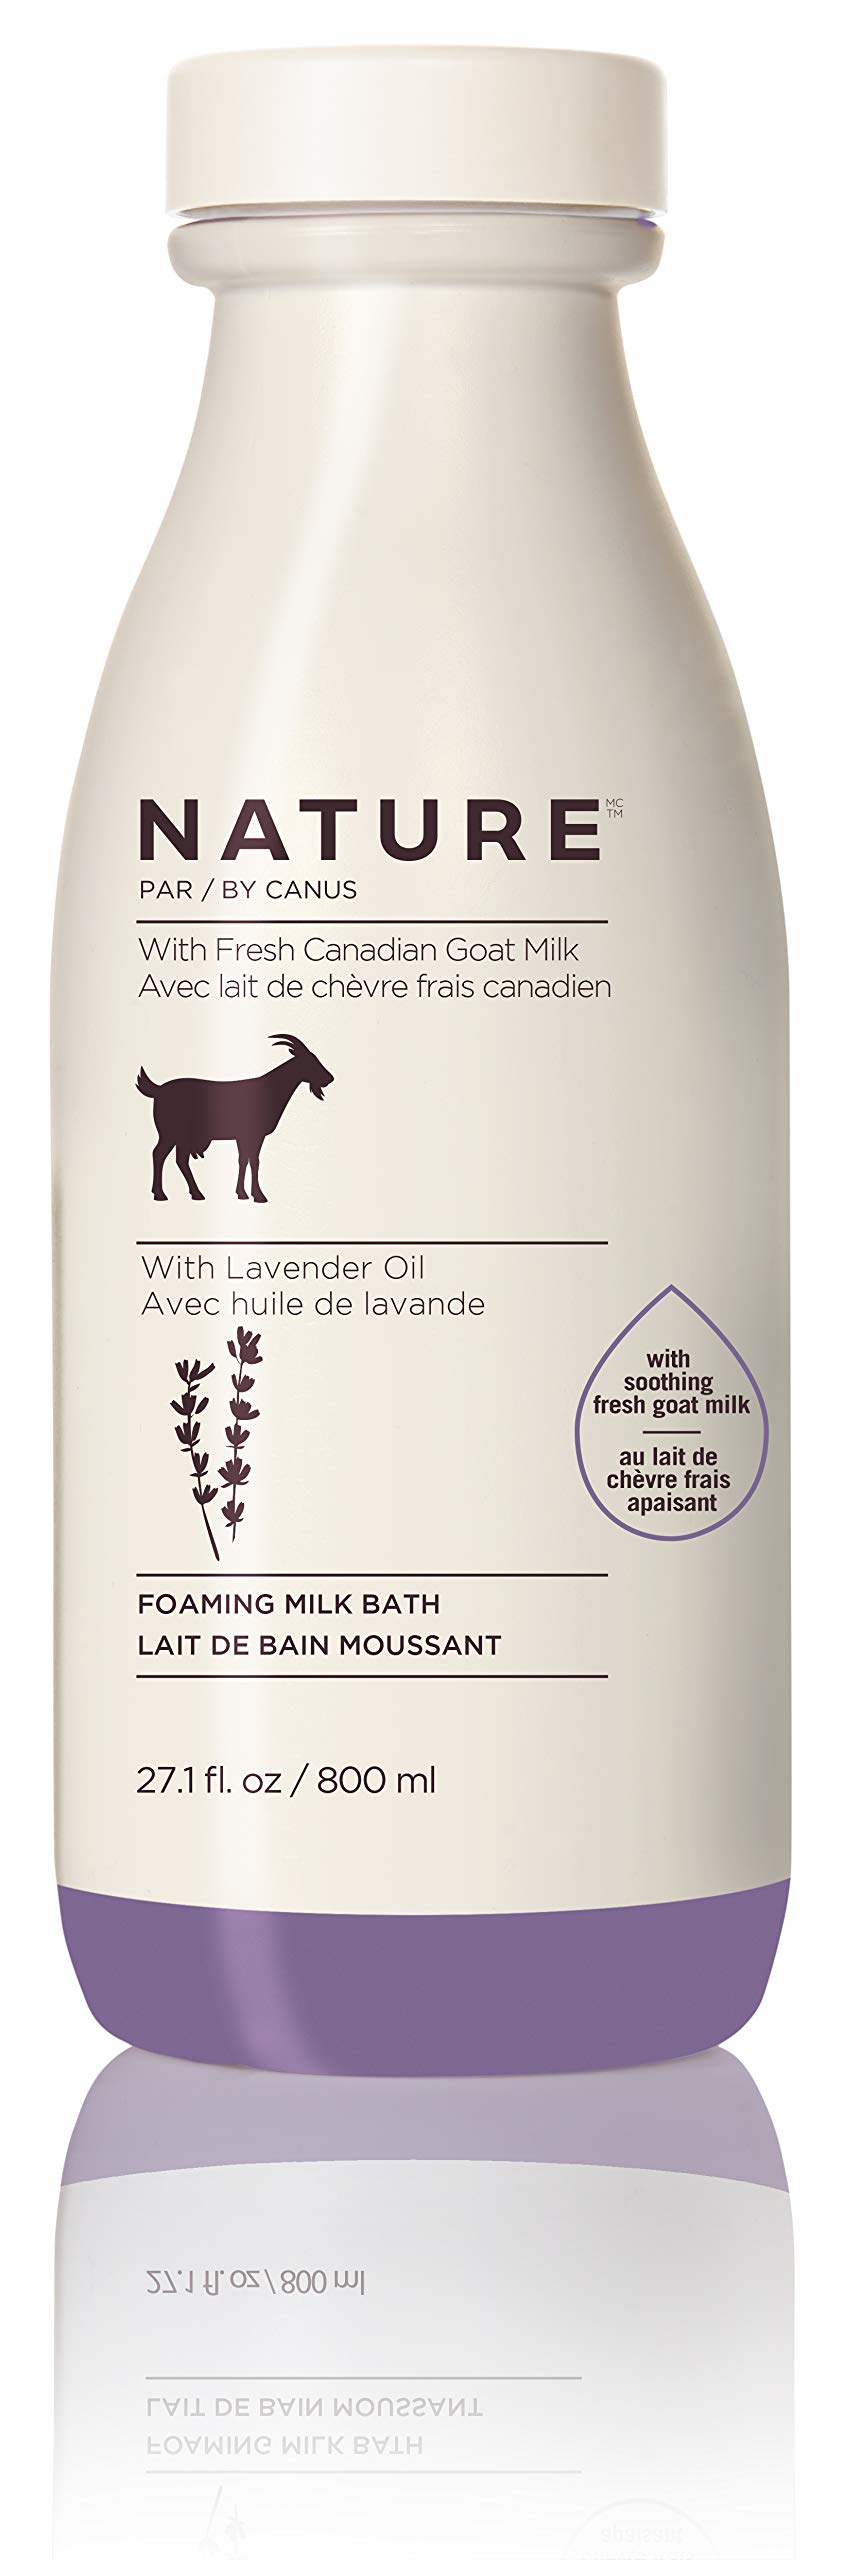 Nature by Canus Foaming Milk Bath With Smoothing Fresh Canadian Goat Milk Vitamin A B3 Potassium Zinc and Selenium, Lavender Oil, 27.1 Fl Oz